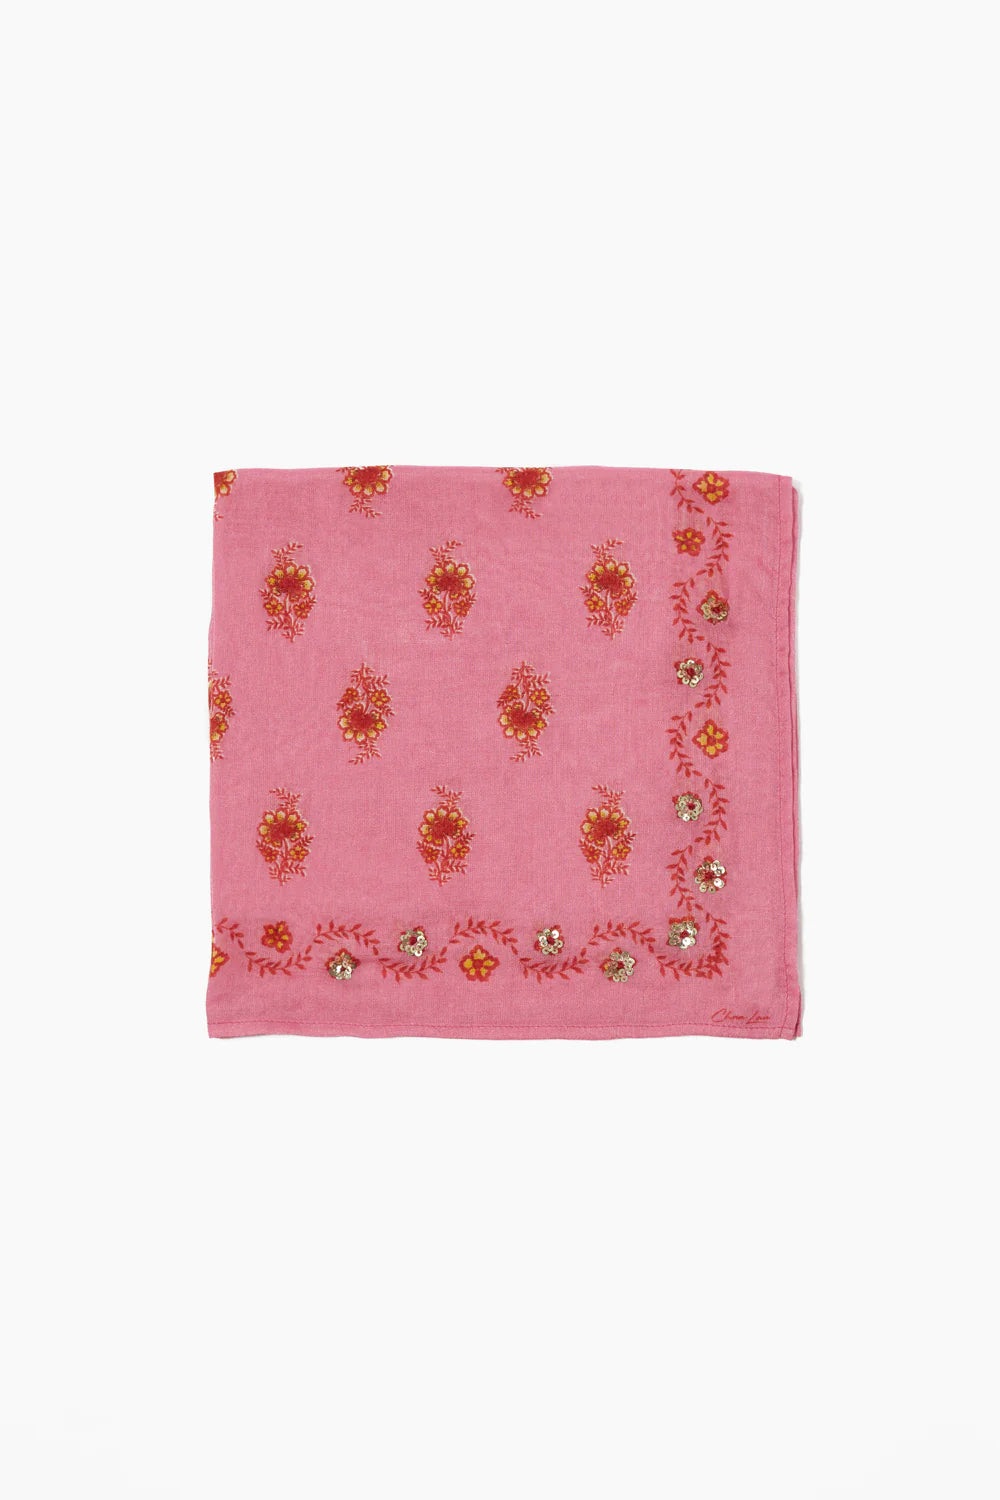 Chan Luu Floral Print Bandana- Fuchsia Pink - Dear Lucy